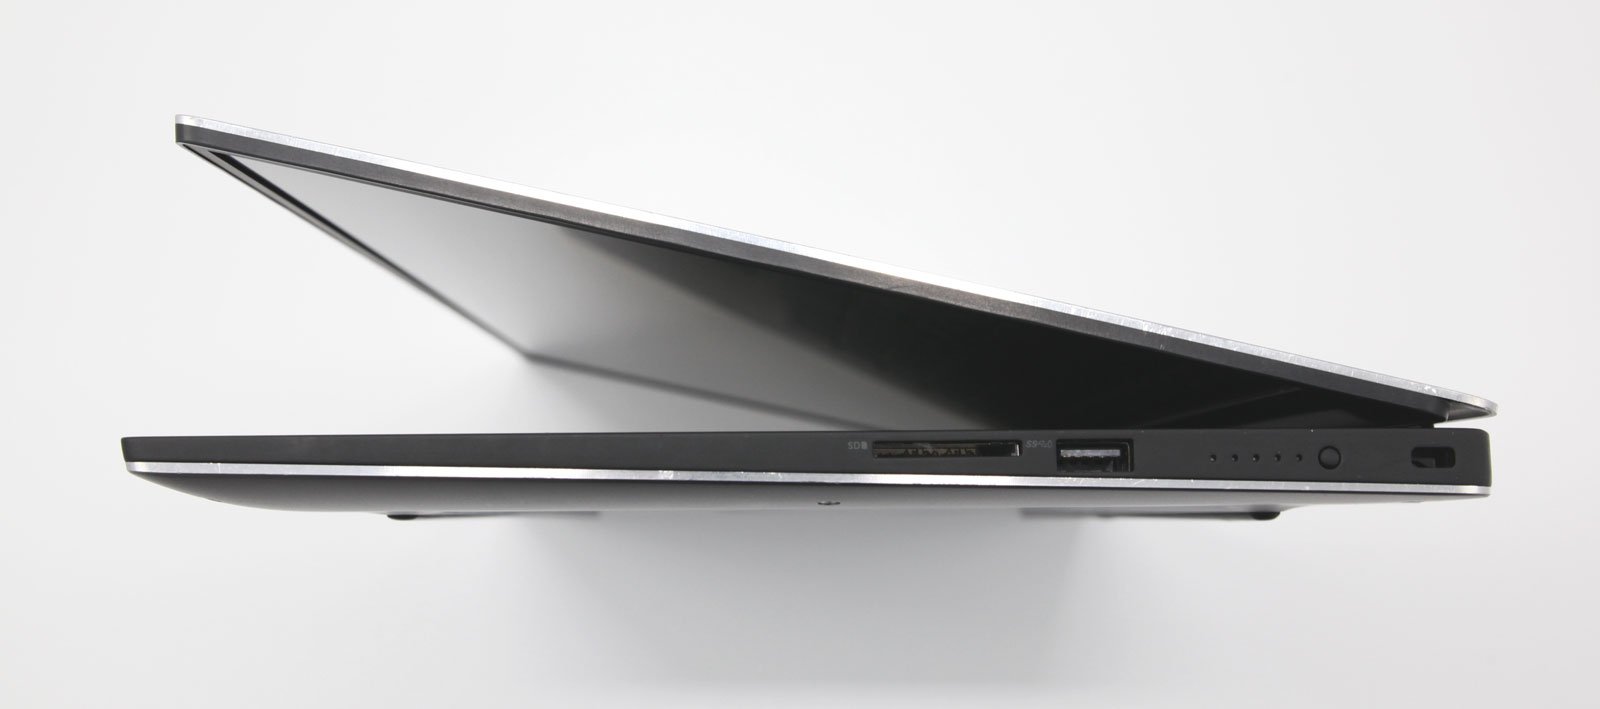 Dell XPS 15 9560 15.6" FHD Laptop: 256GB, Core i7-7700HQ 16GB RAM, GTX 1050 VAT - CruiseTech